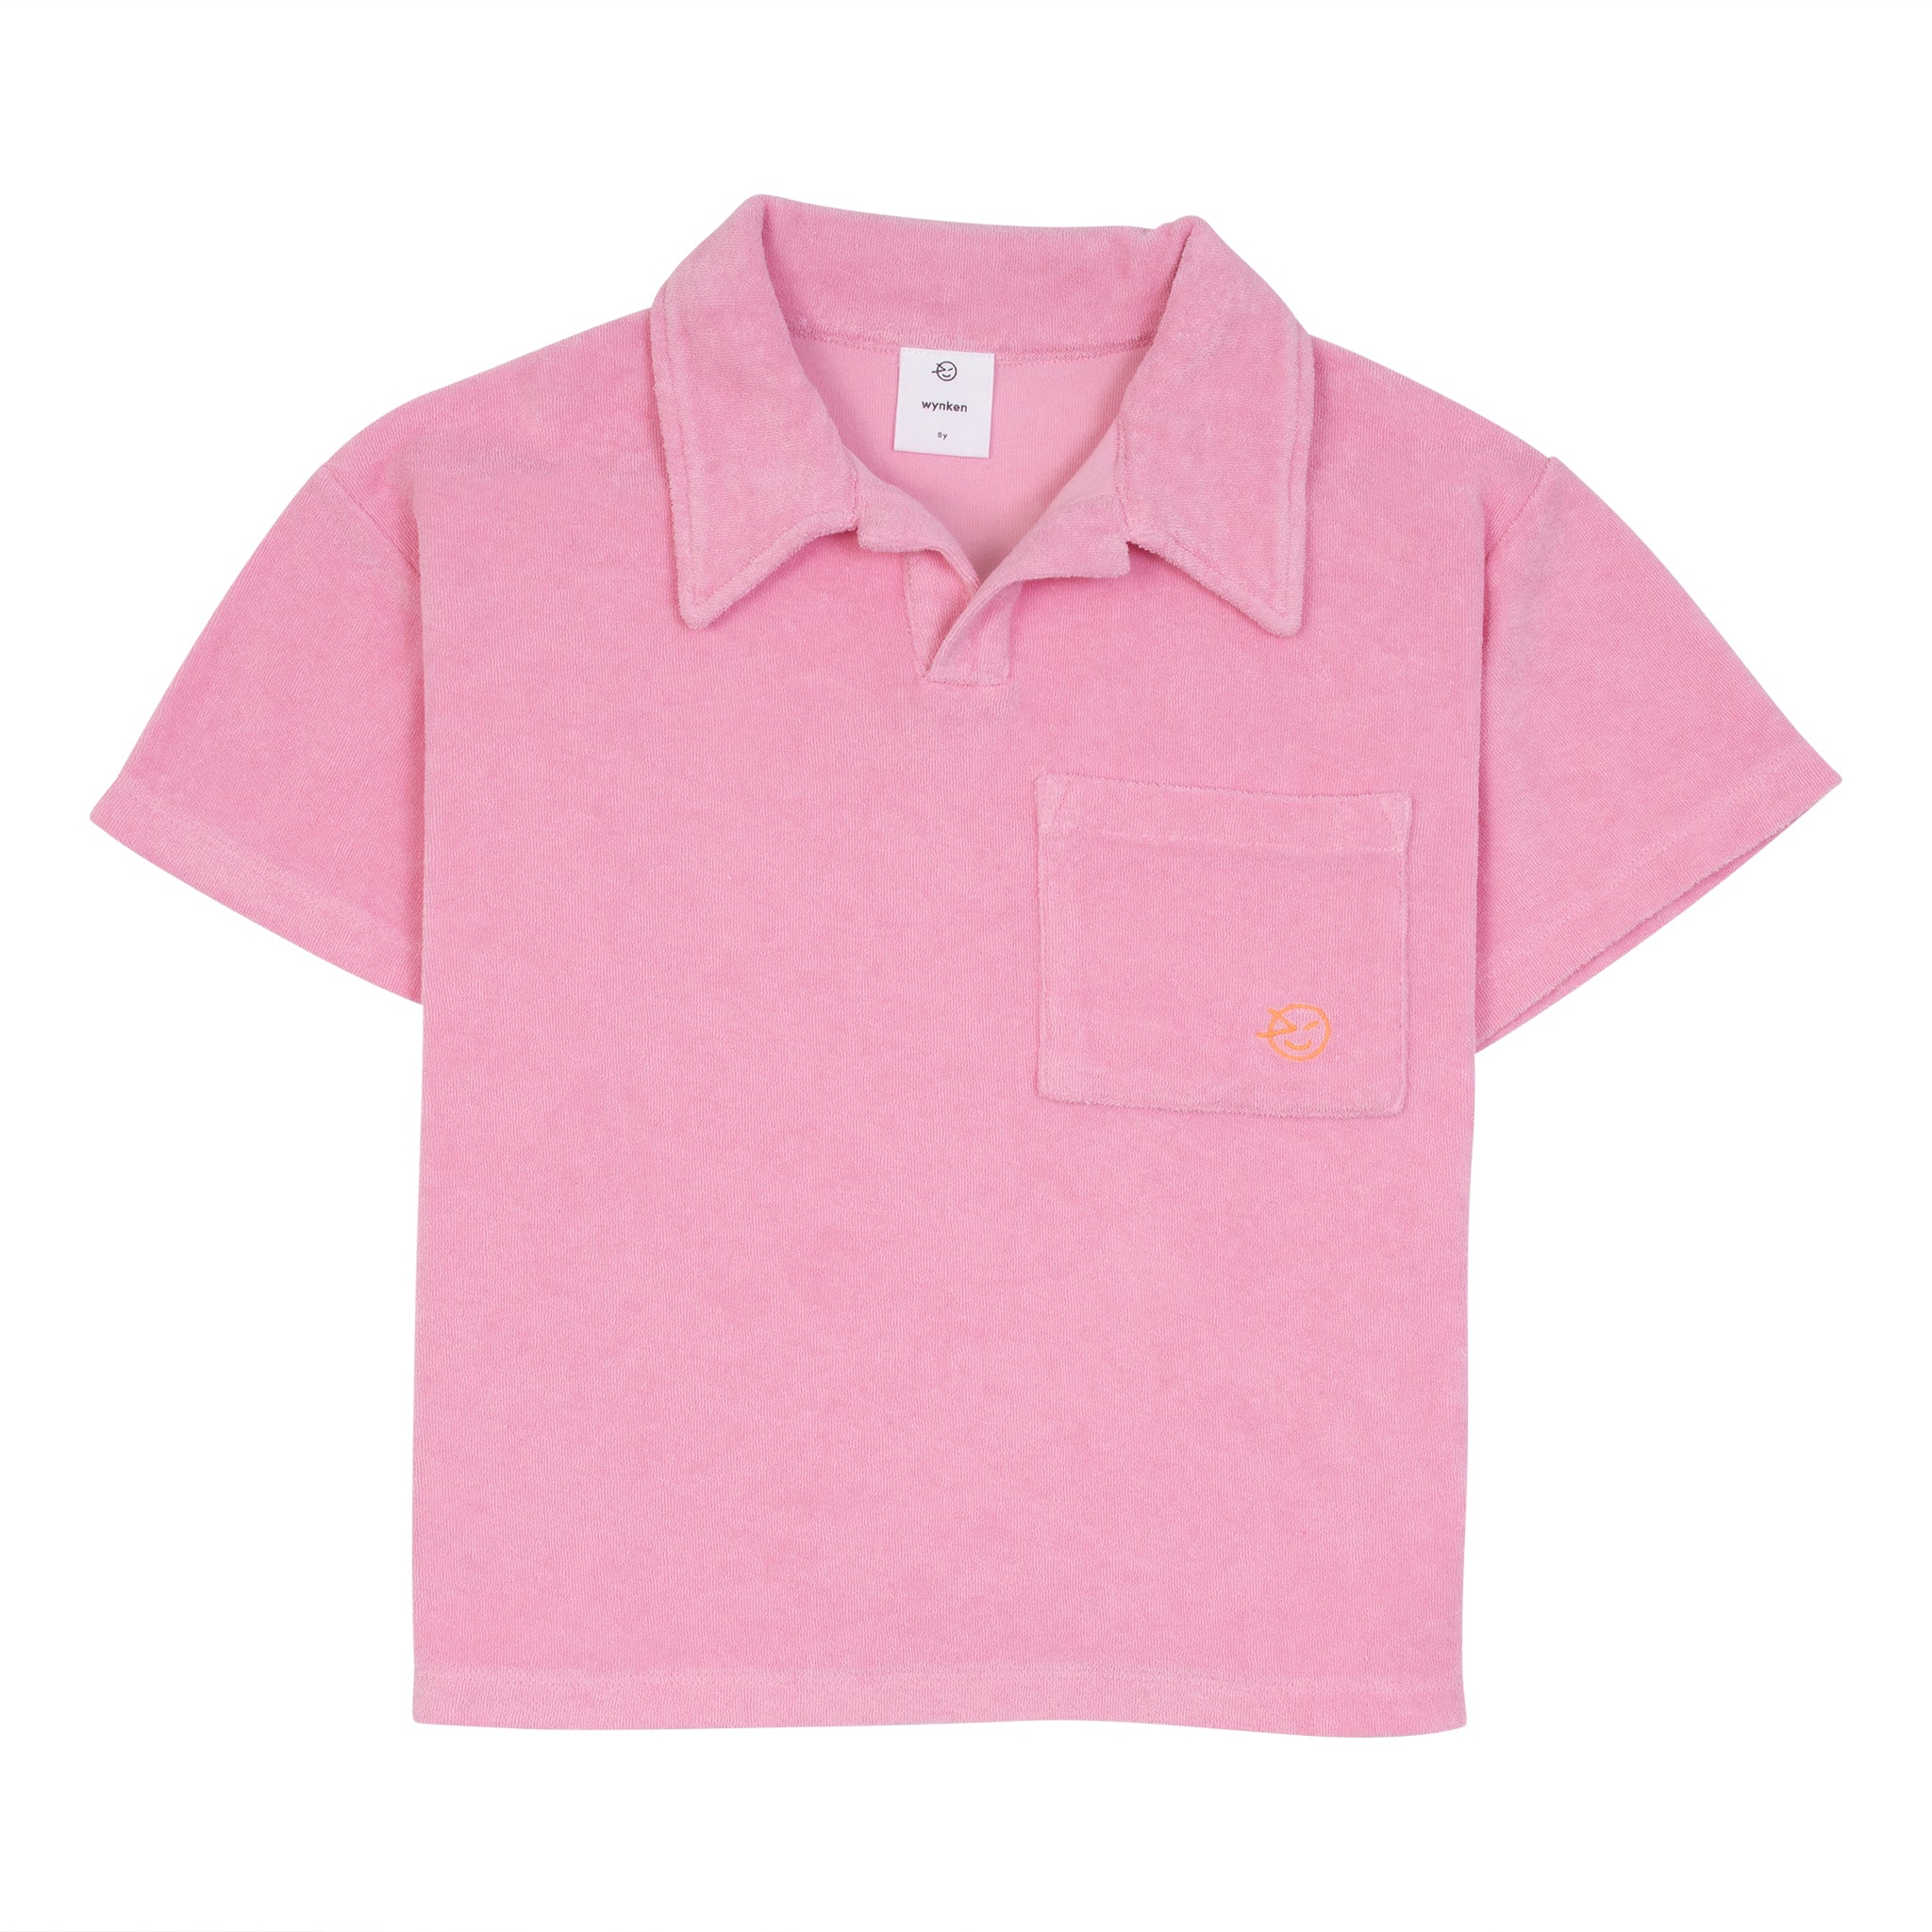 Boys & Girls Pink Cotton Polo Shirt